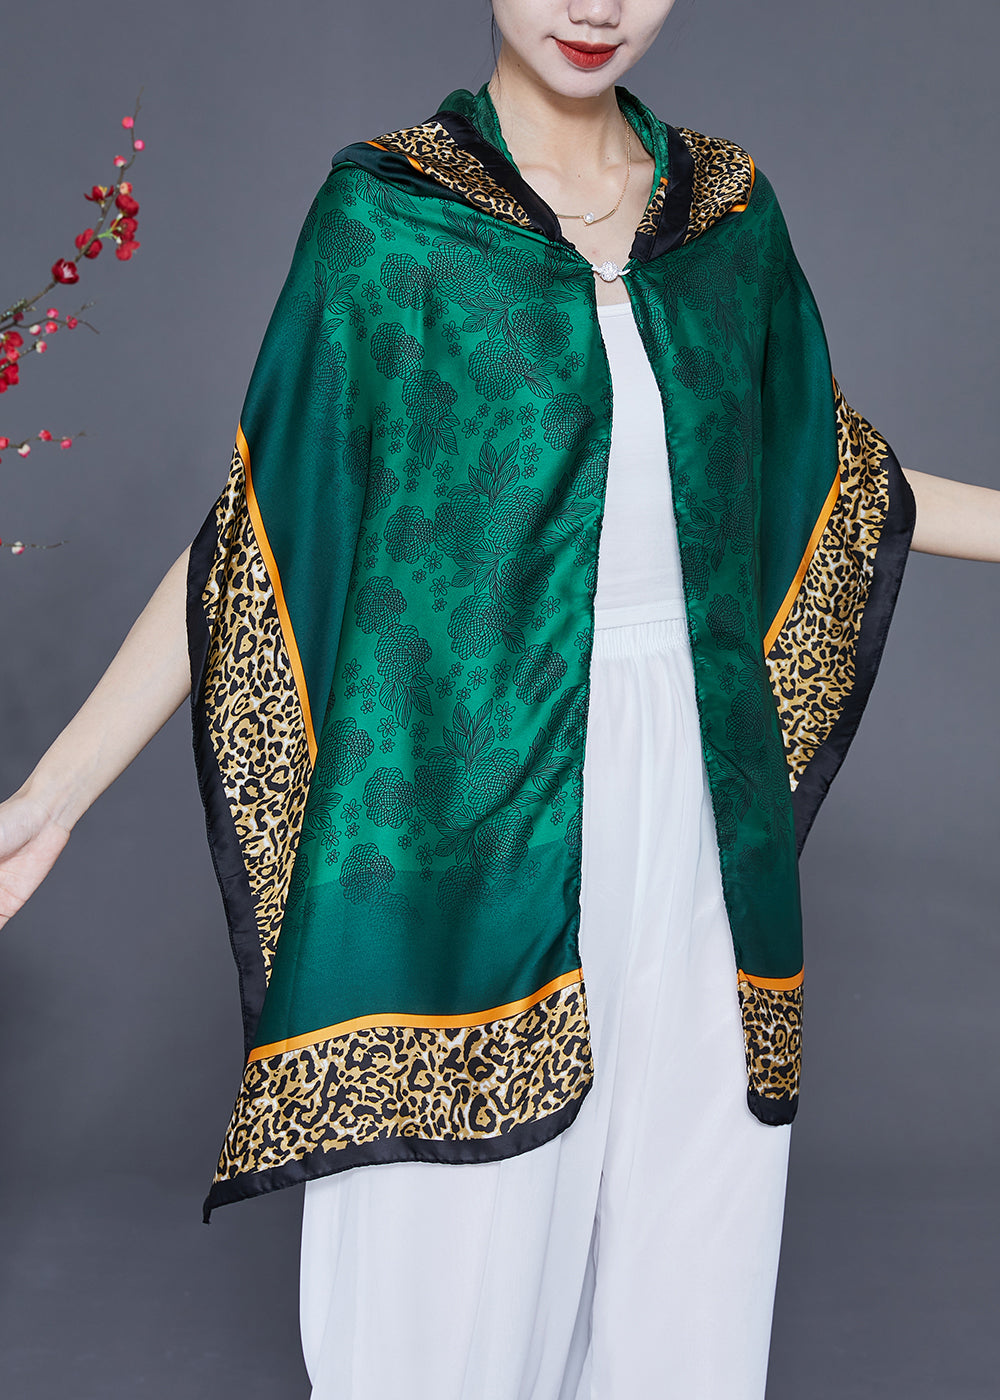 Style Green Hooded Leopard Print Silk Shawl LY2405 - fabuloryshop